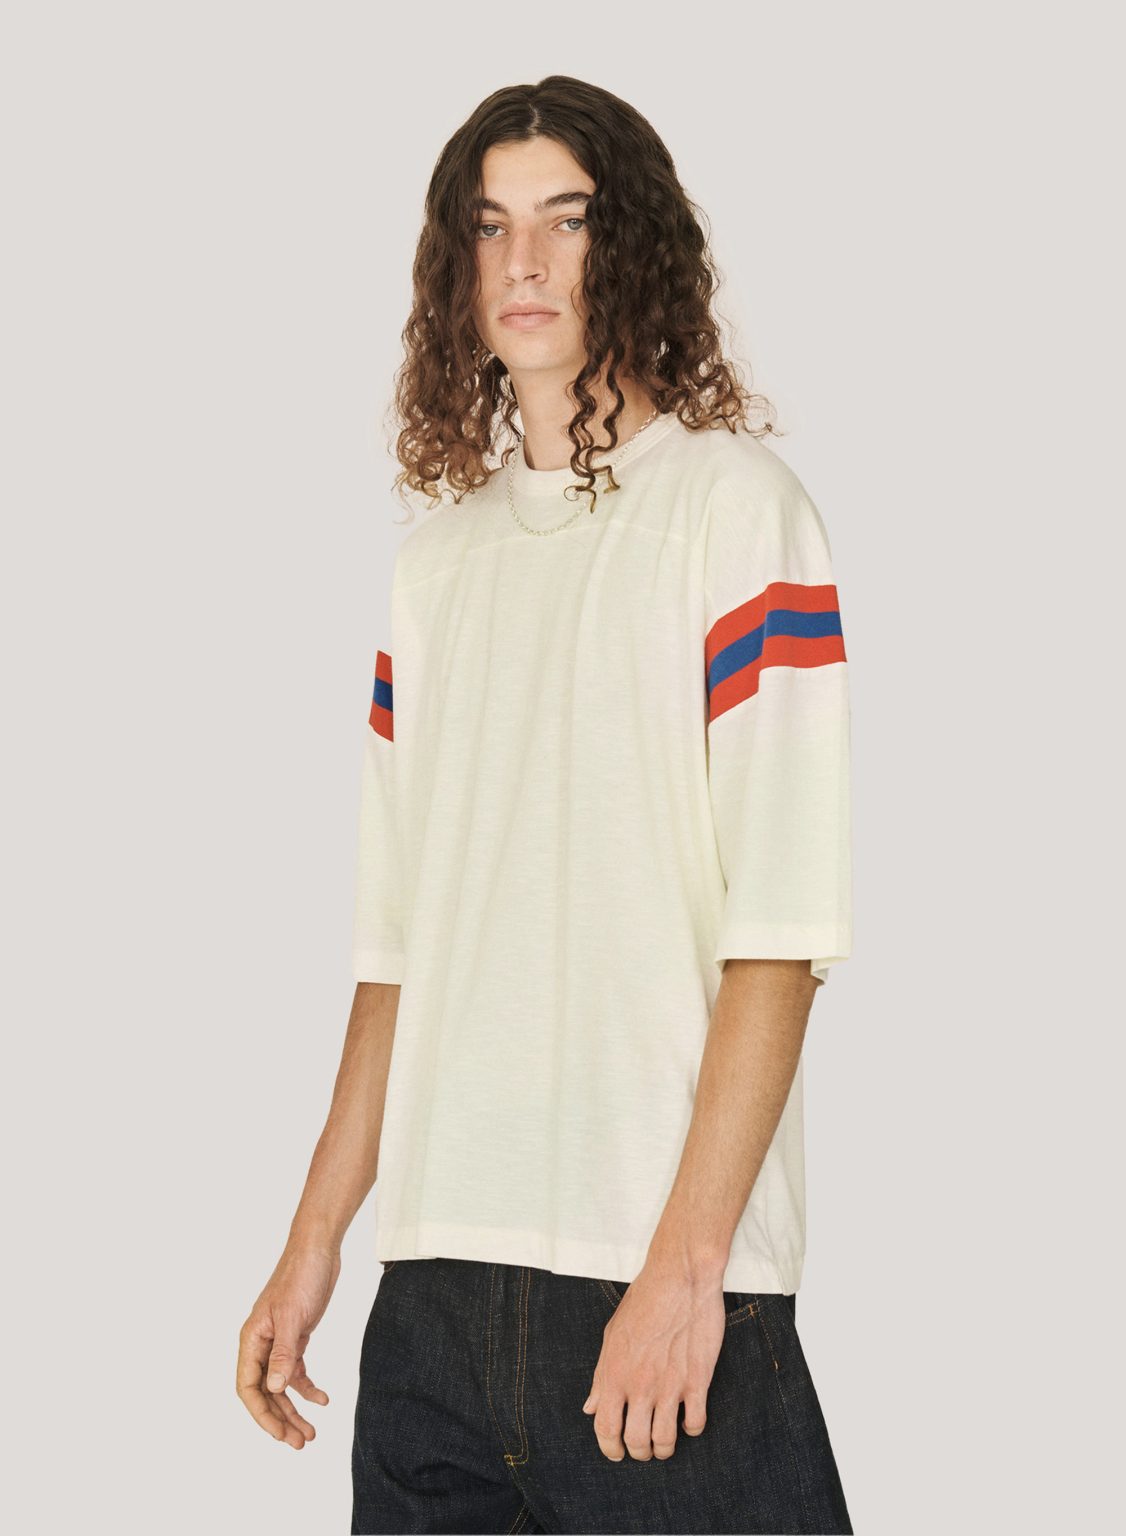 Skate T-Shirt - White/Orange/Blue